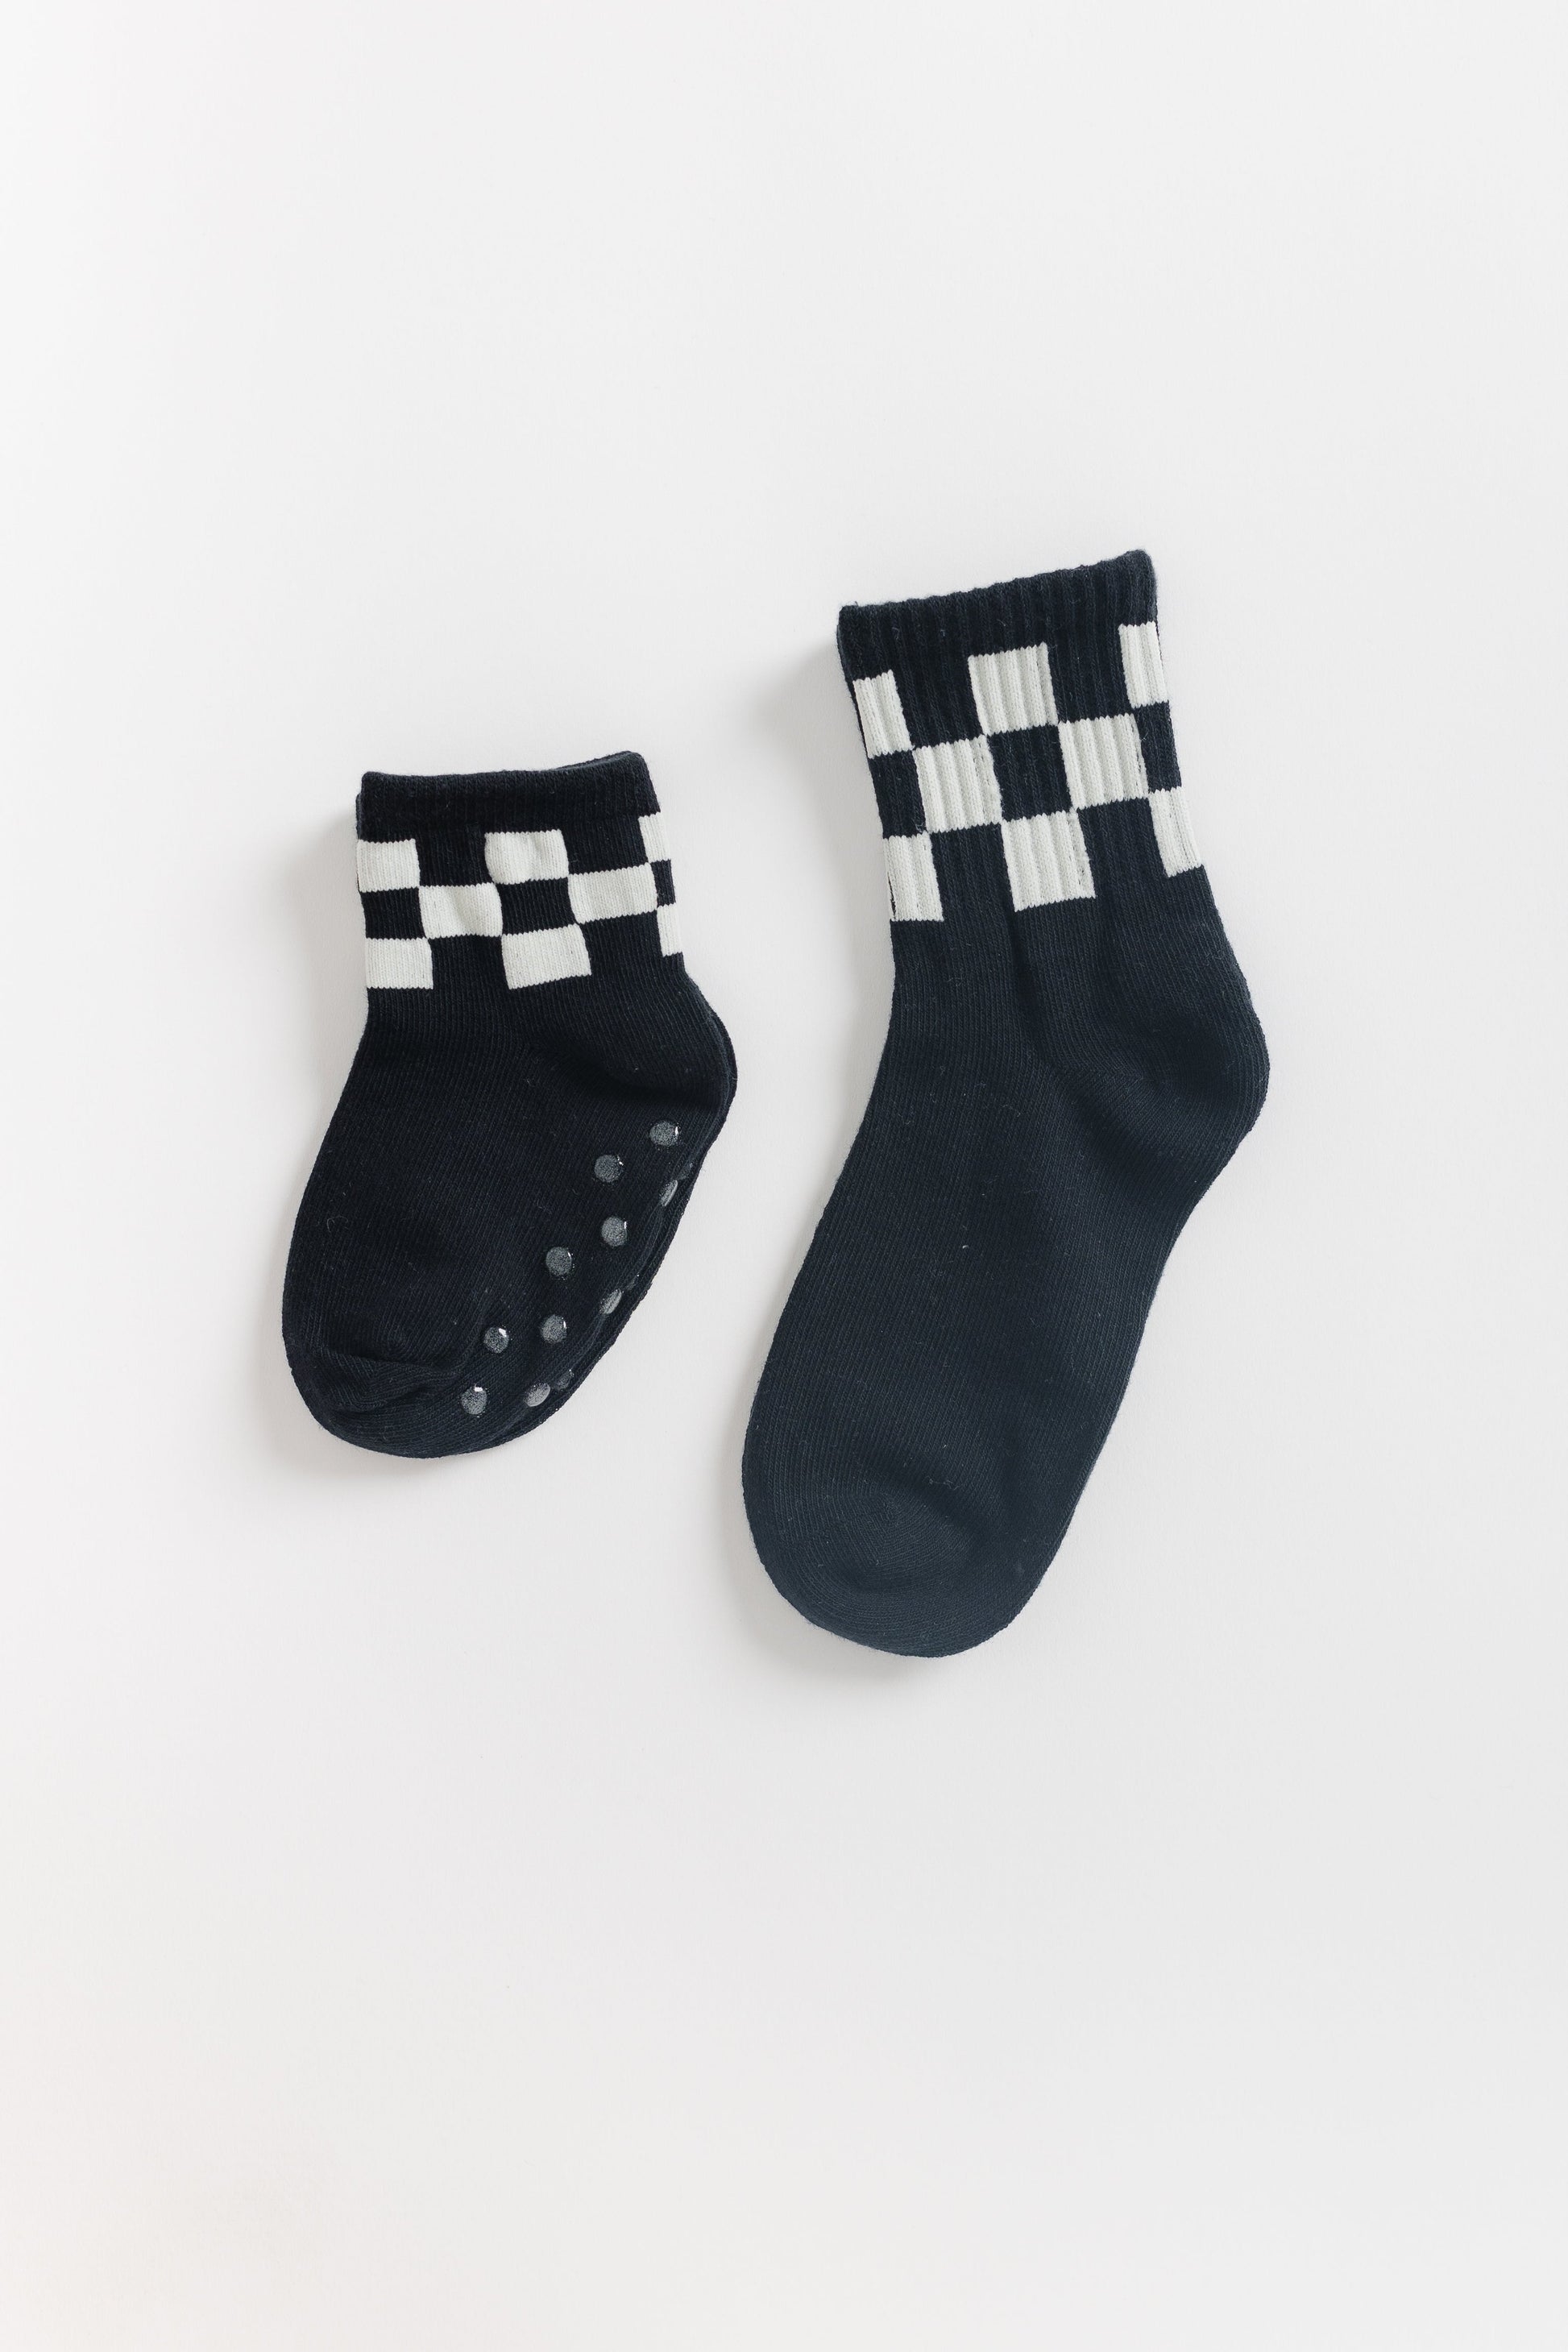 Cove Kids Checker Retro Socks KID'S SOCKS Cove Accessories Black 0-6 mth 